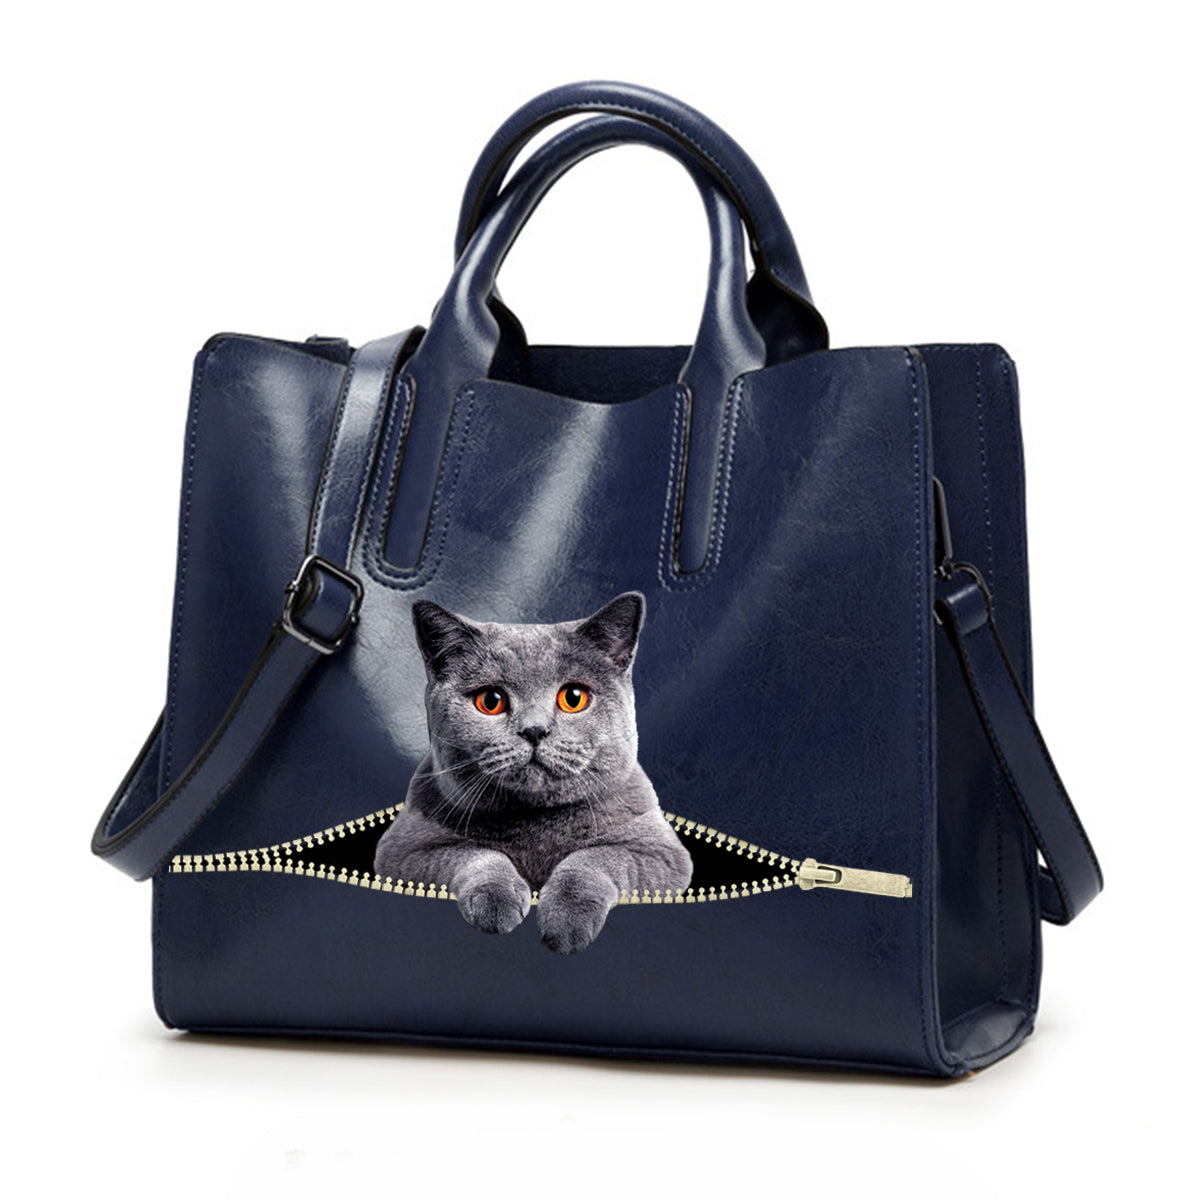 Reduce Stress At Work With British Shorthair Cat - Luxury Handbag V1